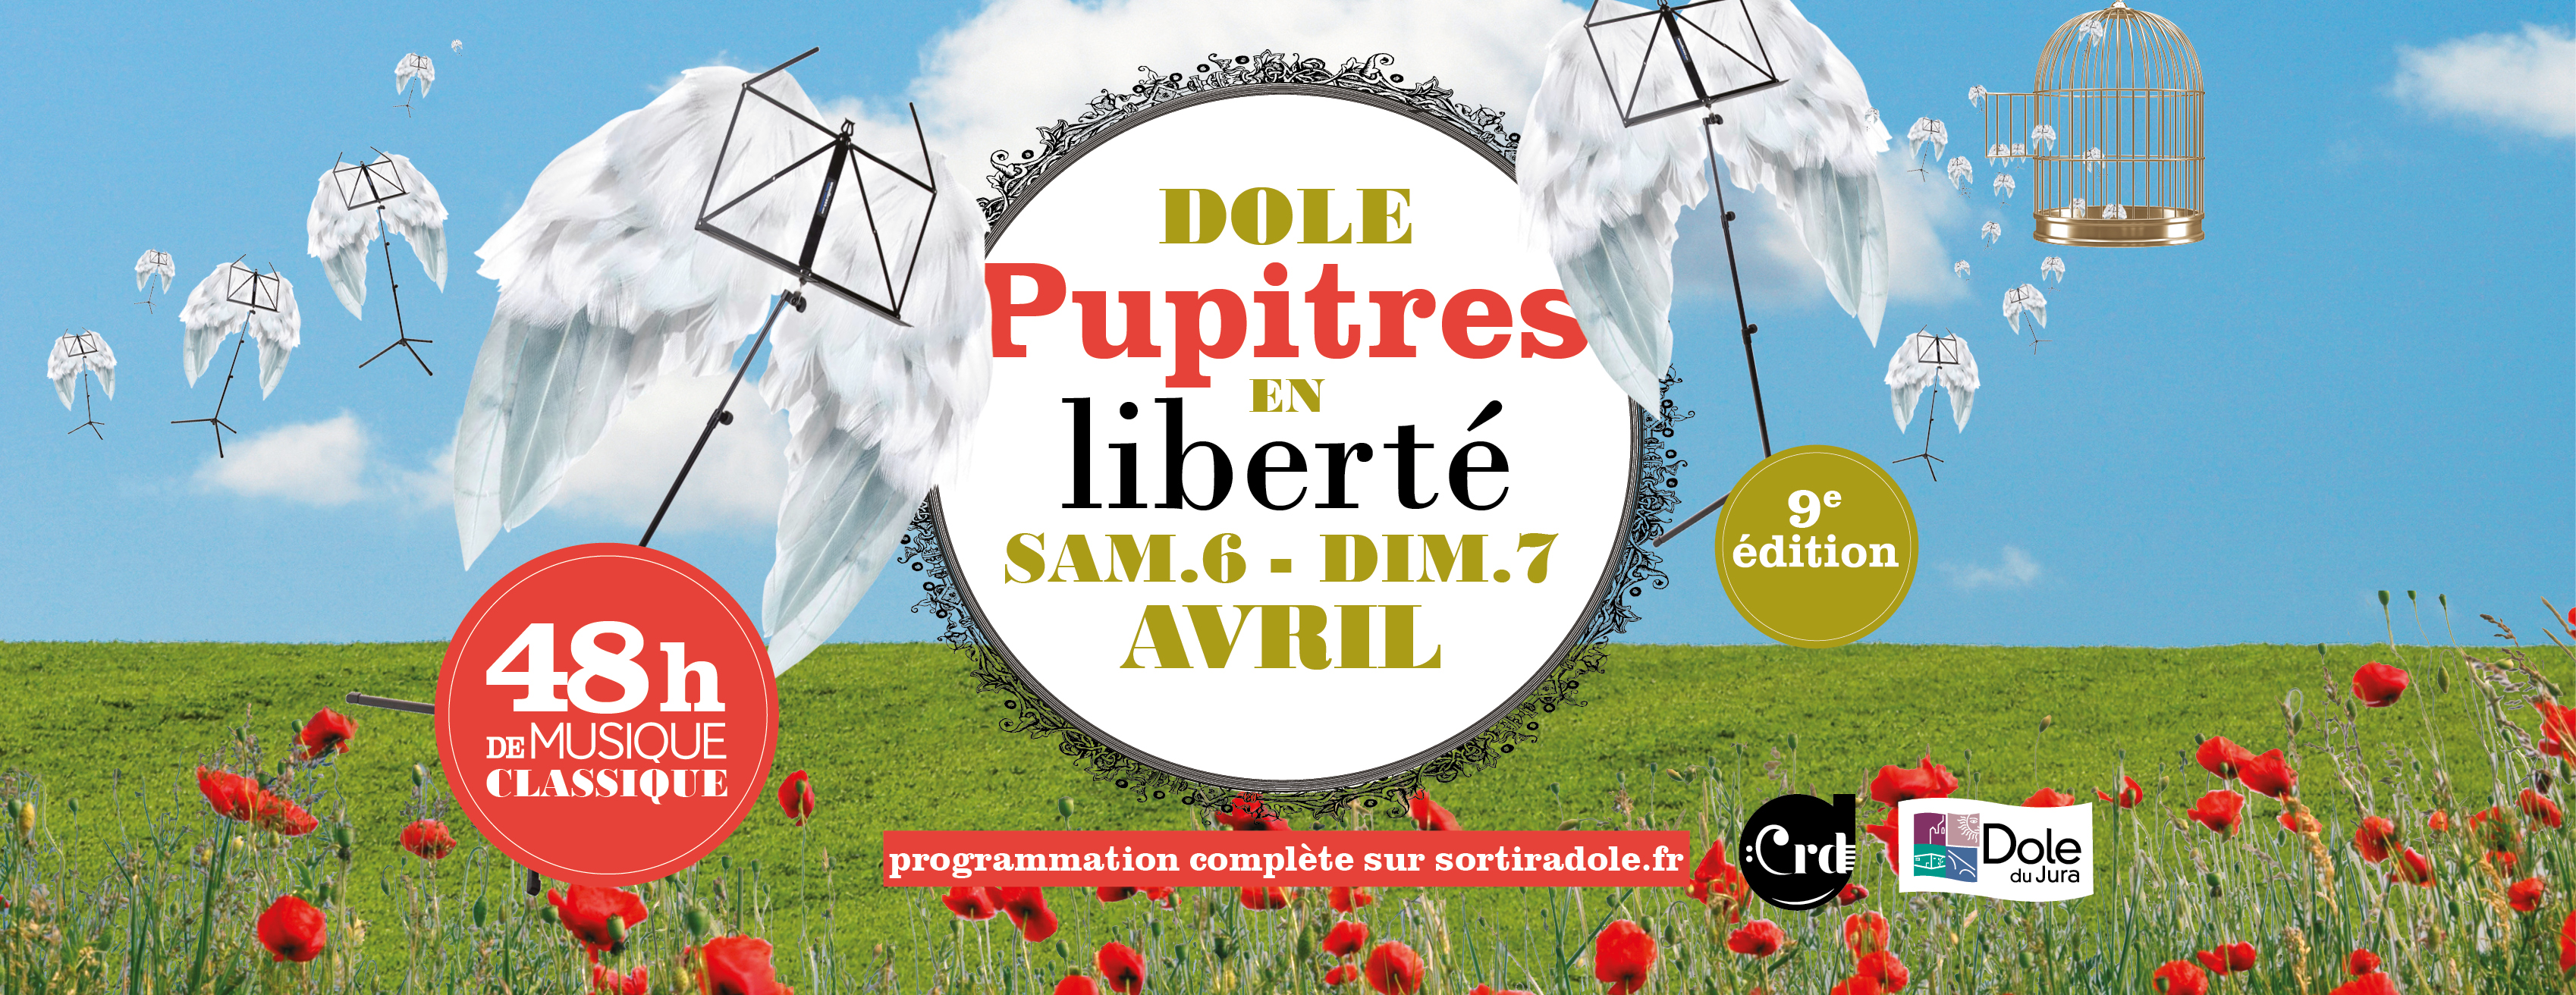 Pupitres en Liberté - Edition 9